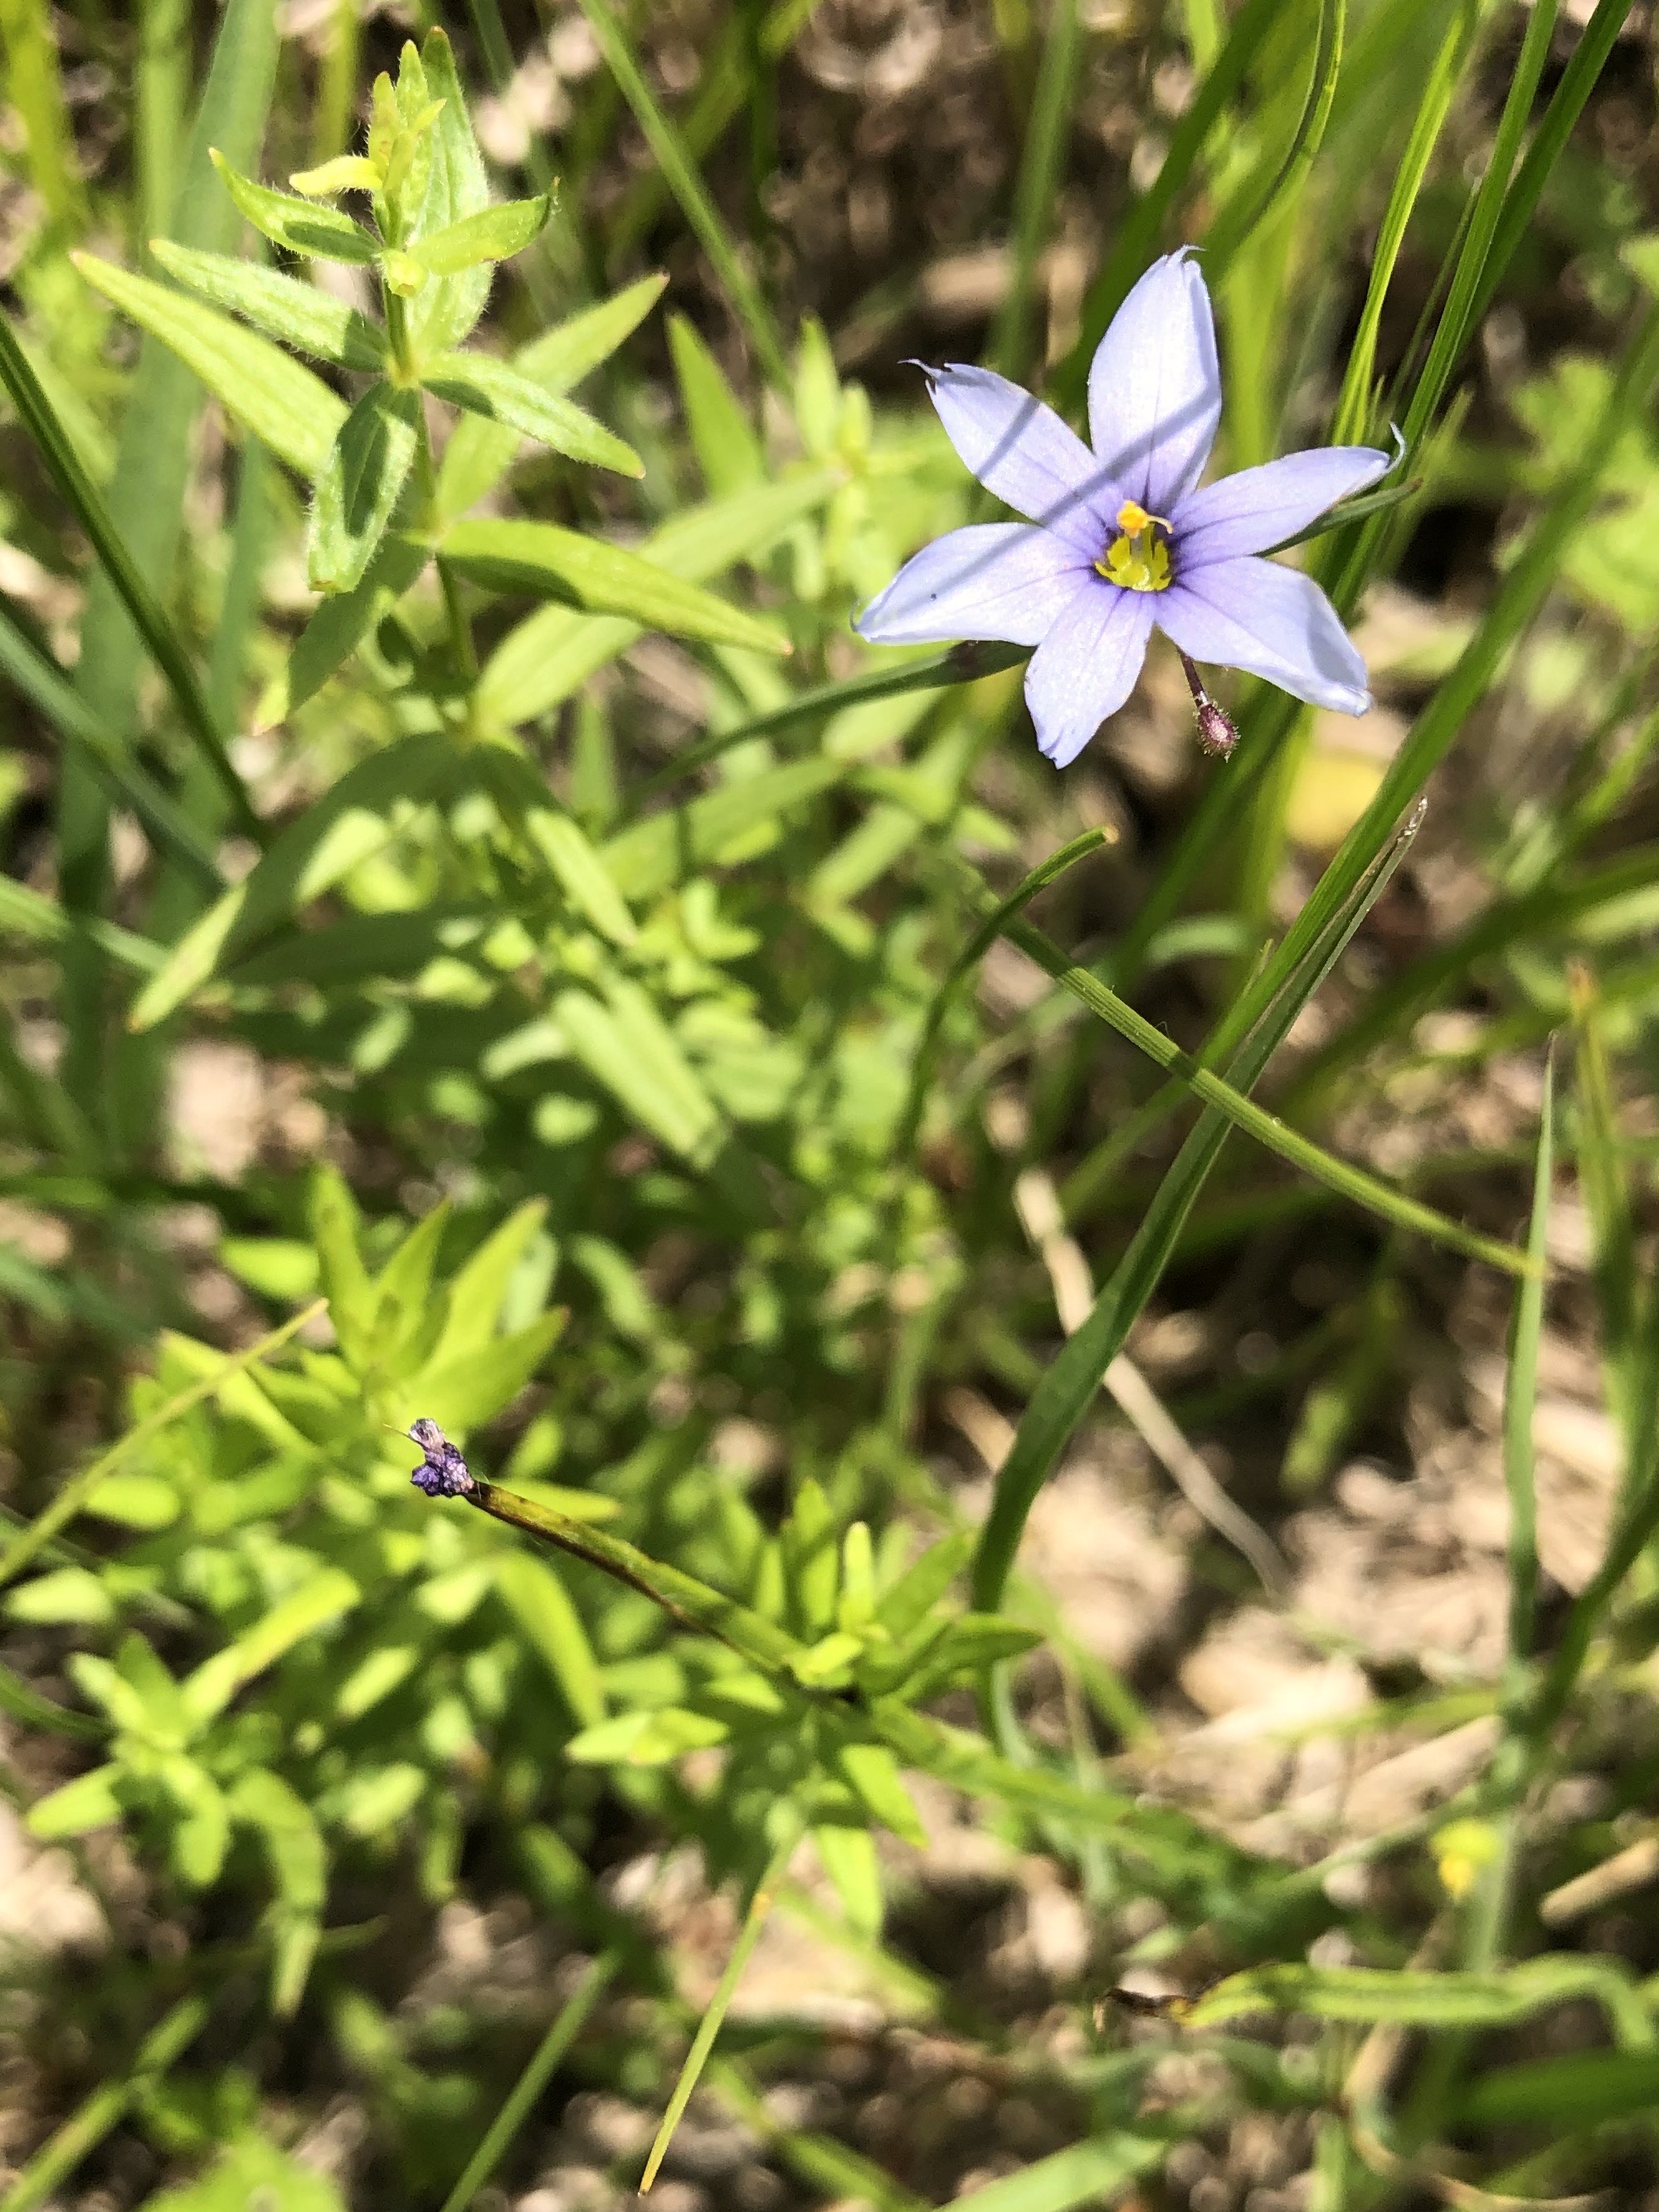 Blue-eyed Grass in UW Arboretum's Greene Prairie in Madison, Wisconsin on June 1, 2021.